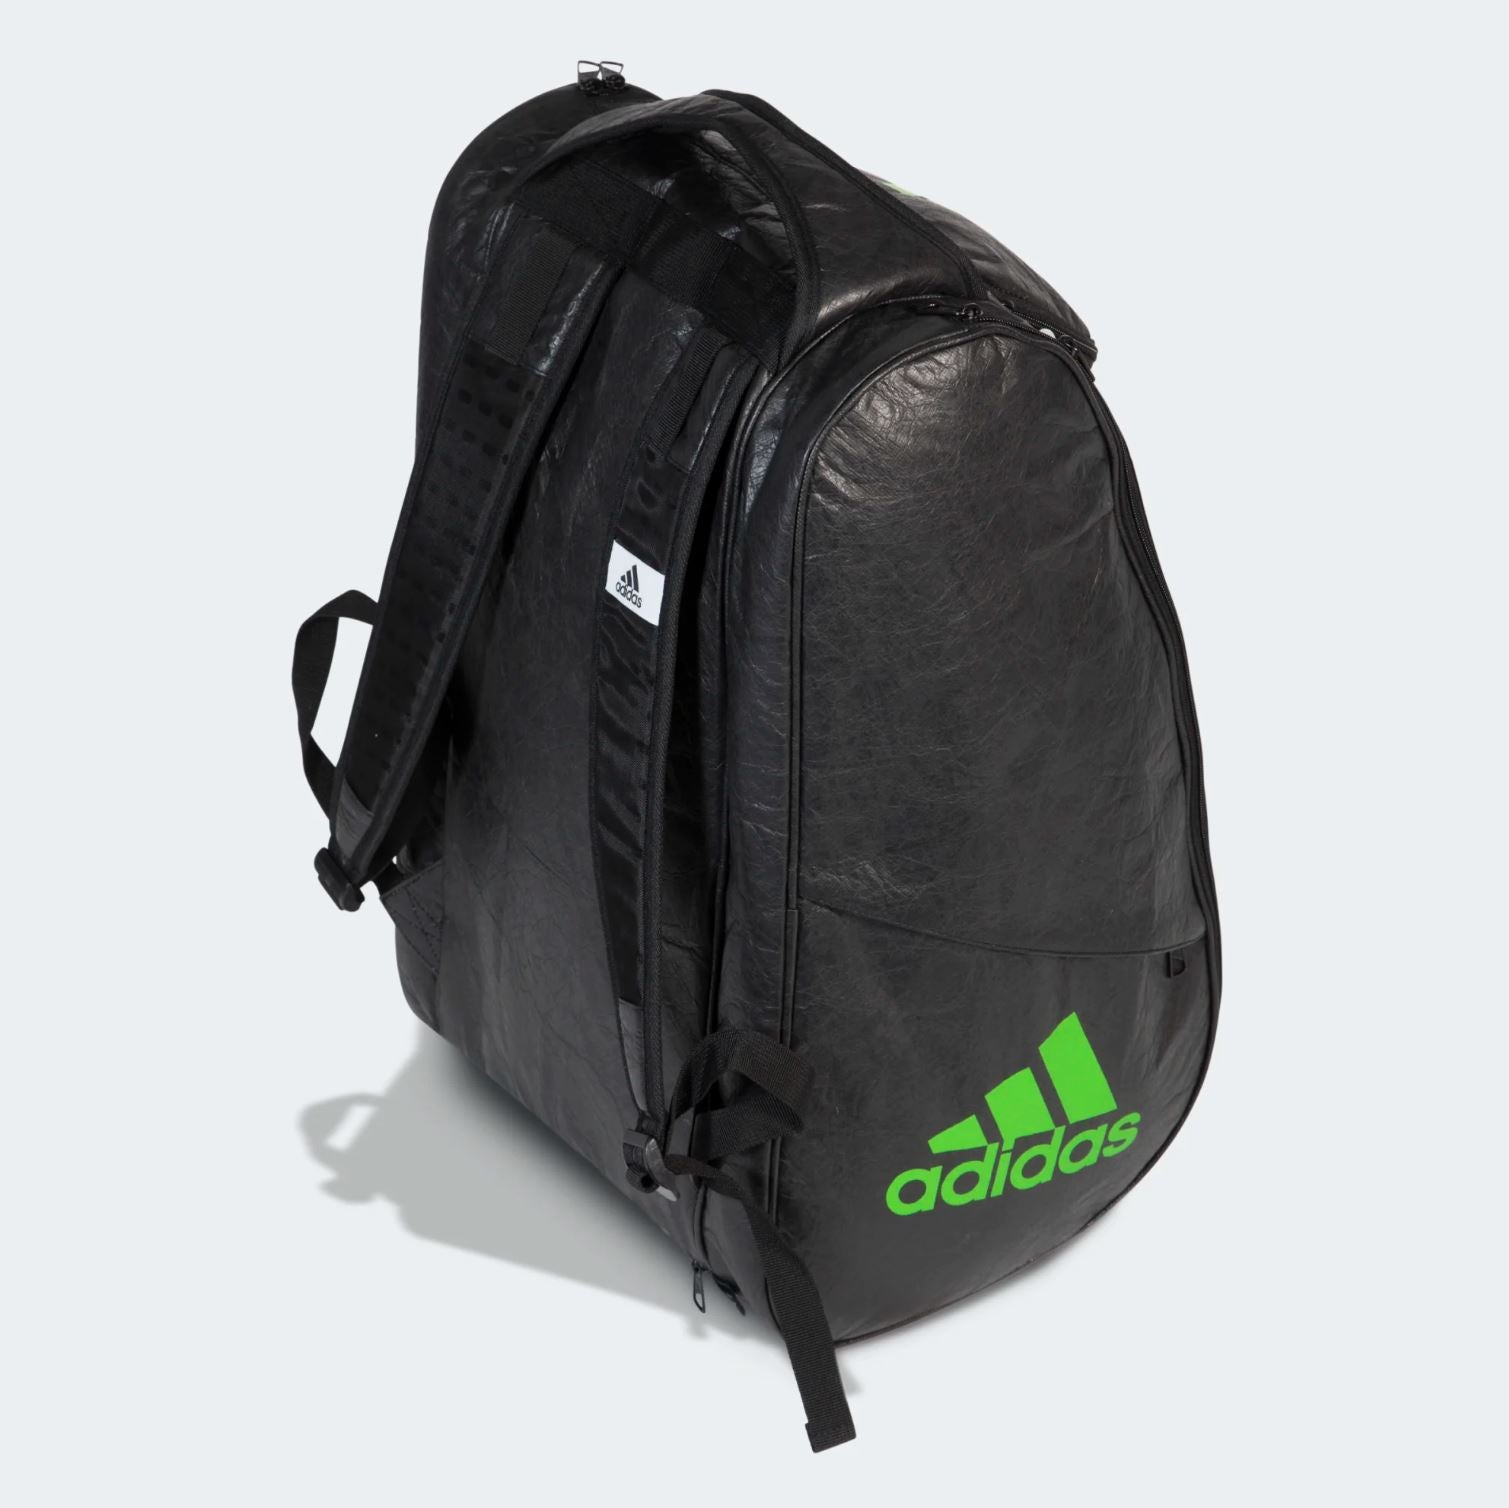 Adidas Multigame Padel Bag (Black/Green)